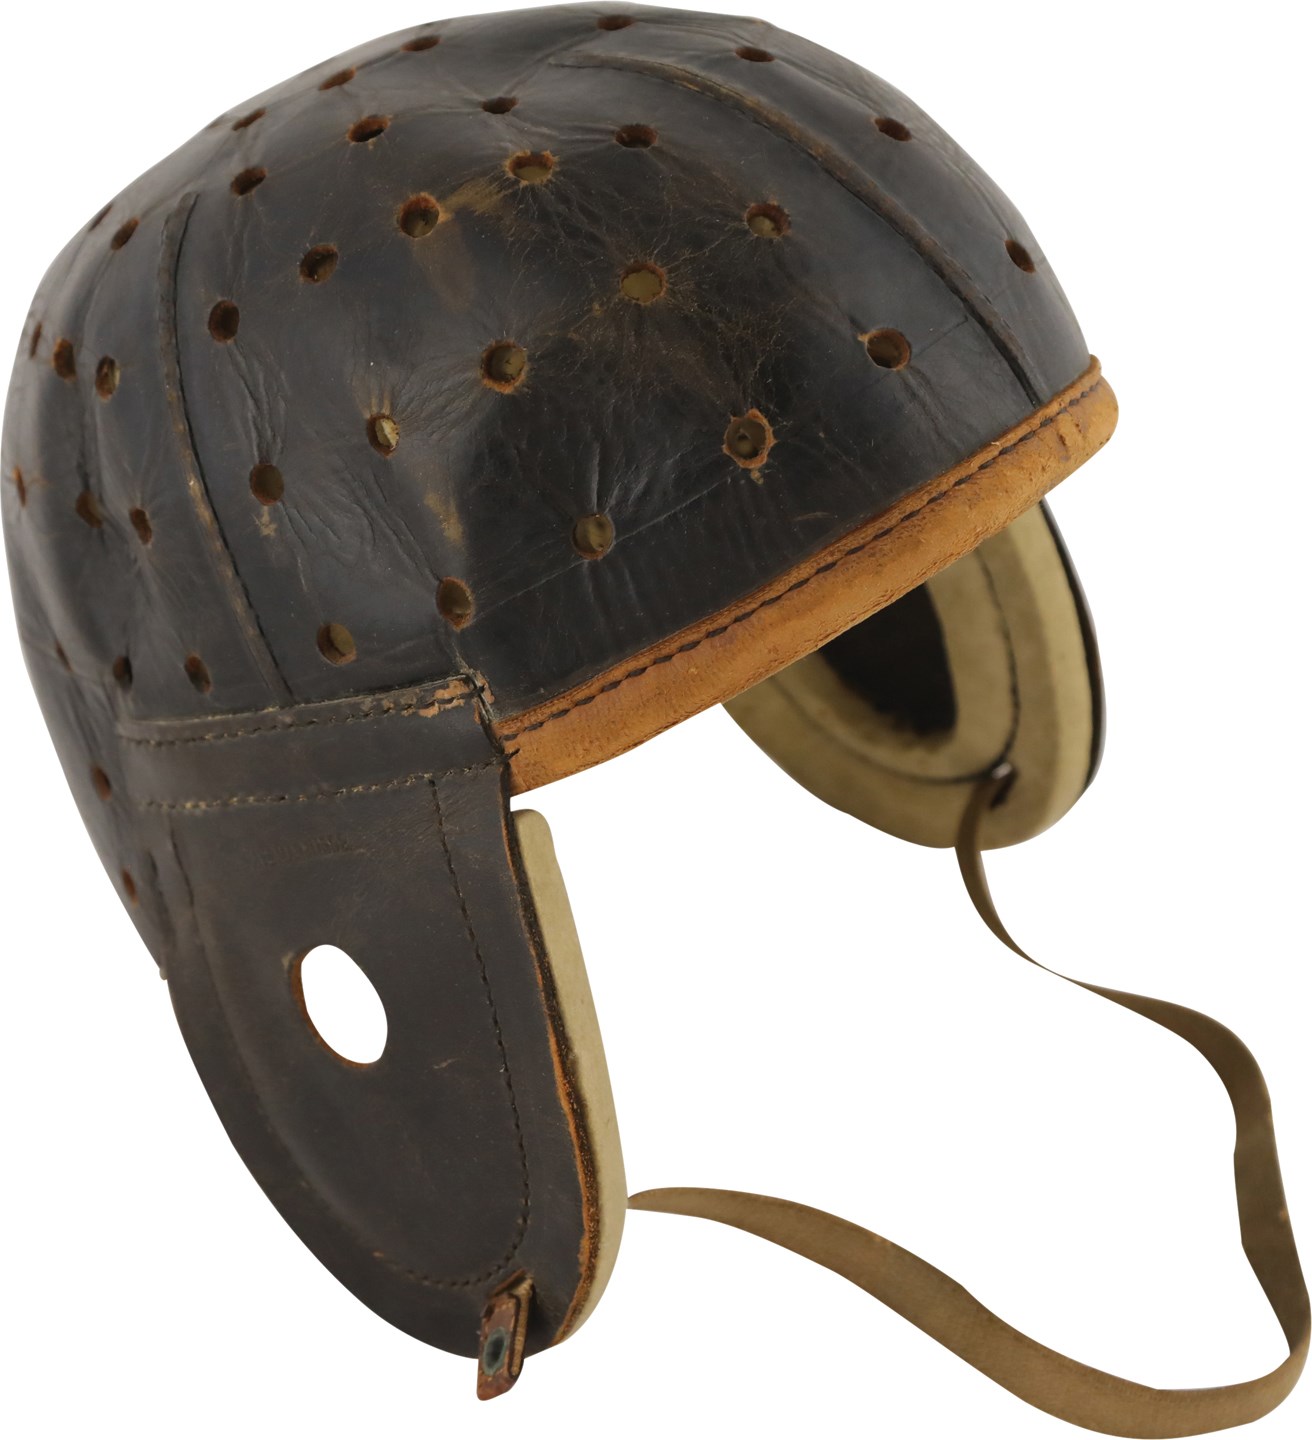 Early 1900s Reach Football Head Harness Original Box w/Leather Helmet